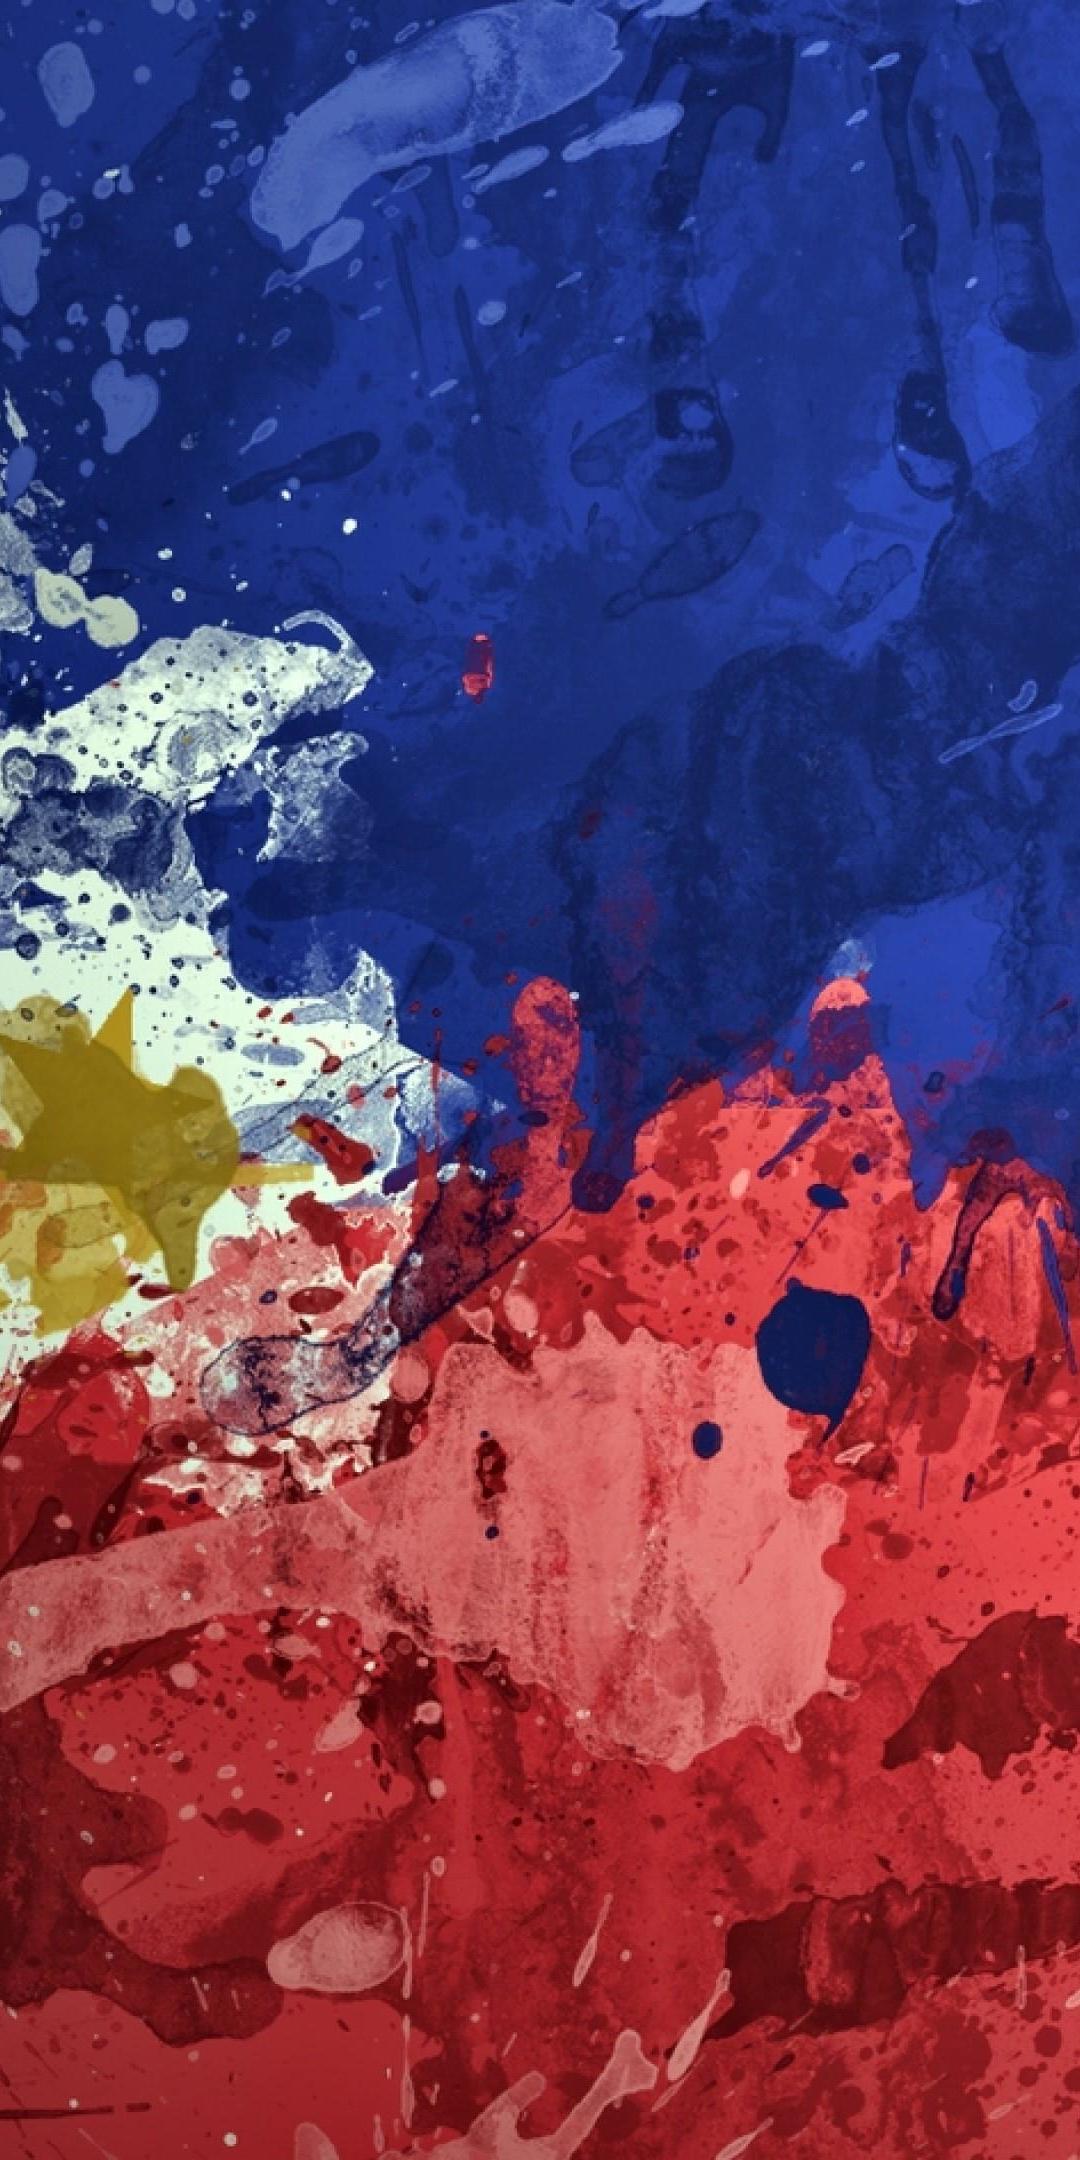 Philippines Flag 4K UltraHD Wallpaper. Wallpaper Studio 10. Tens